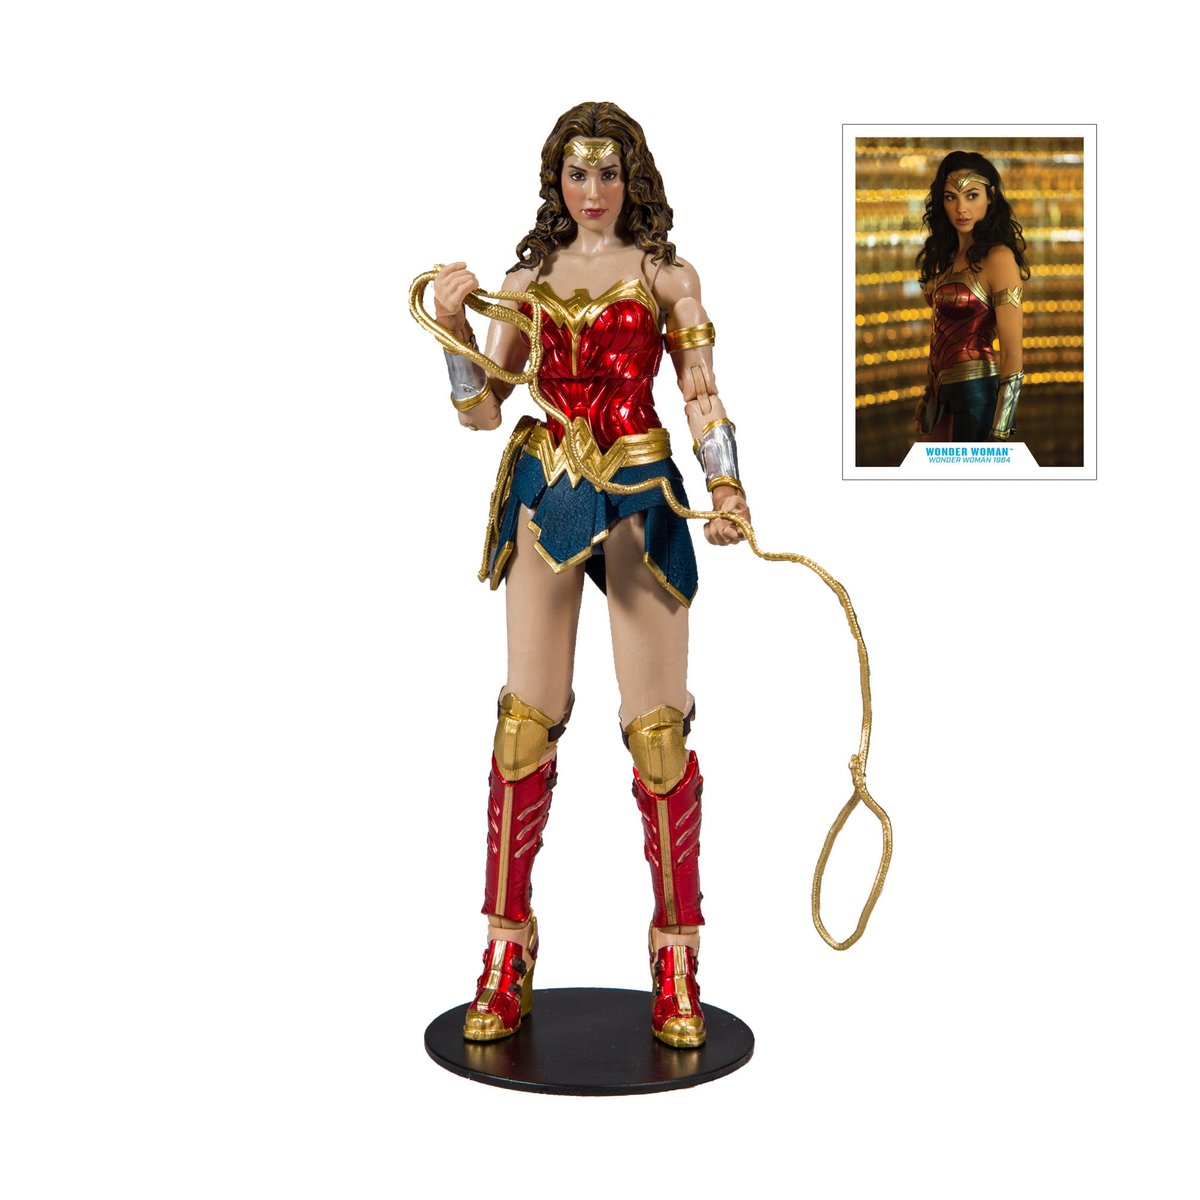 38% Off!

McFarlane DC Multiverse Wonder Woman 1984

https://t.co/cMQY3vNSQi

#BwcDeals #clearthelist #amazonfba #amazonfbm #Arbitrage #Deals https://t.co/k7qSNPLdK6